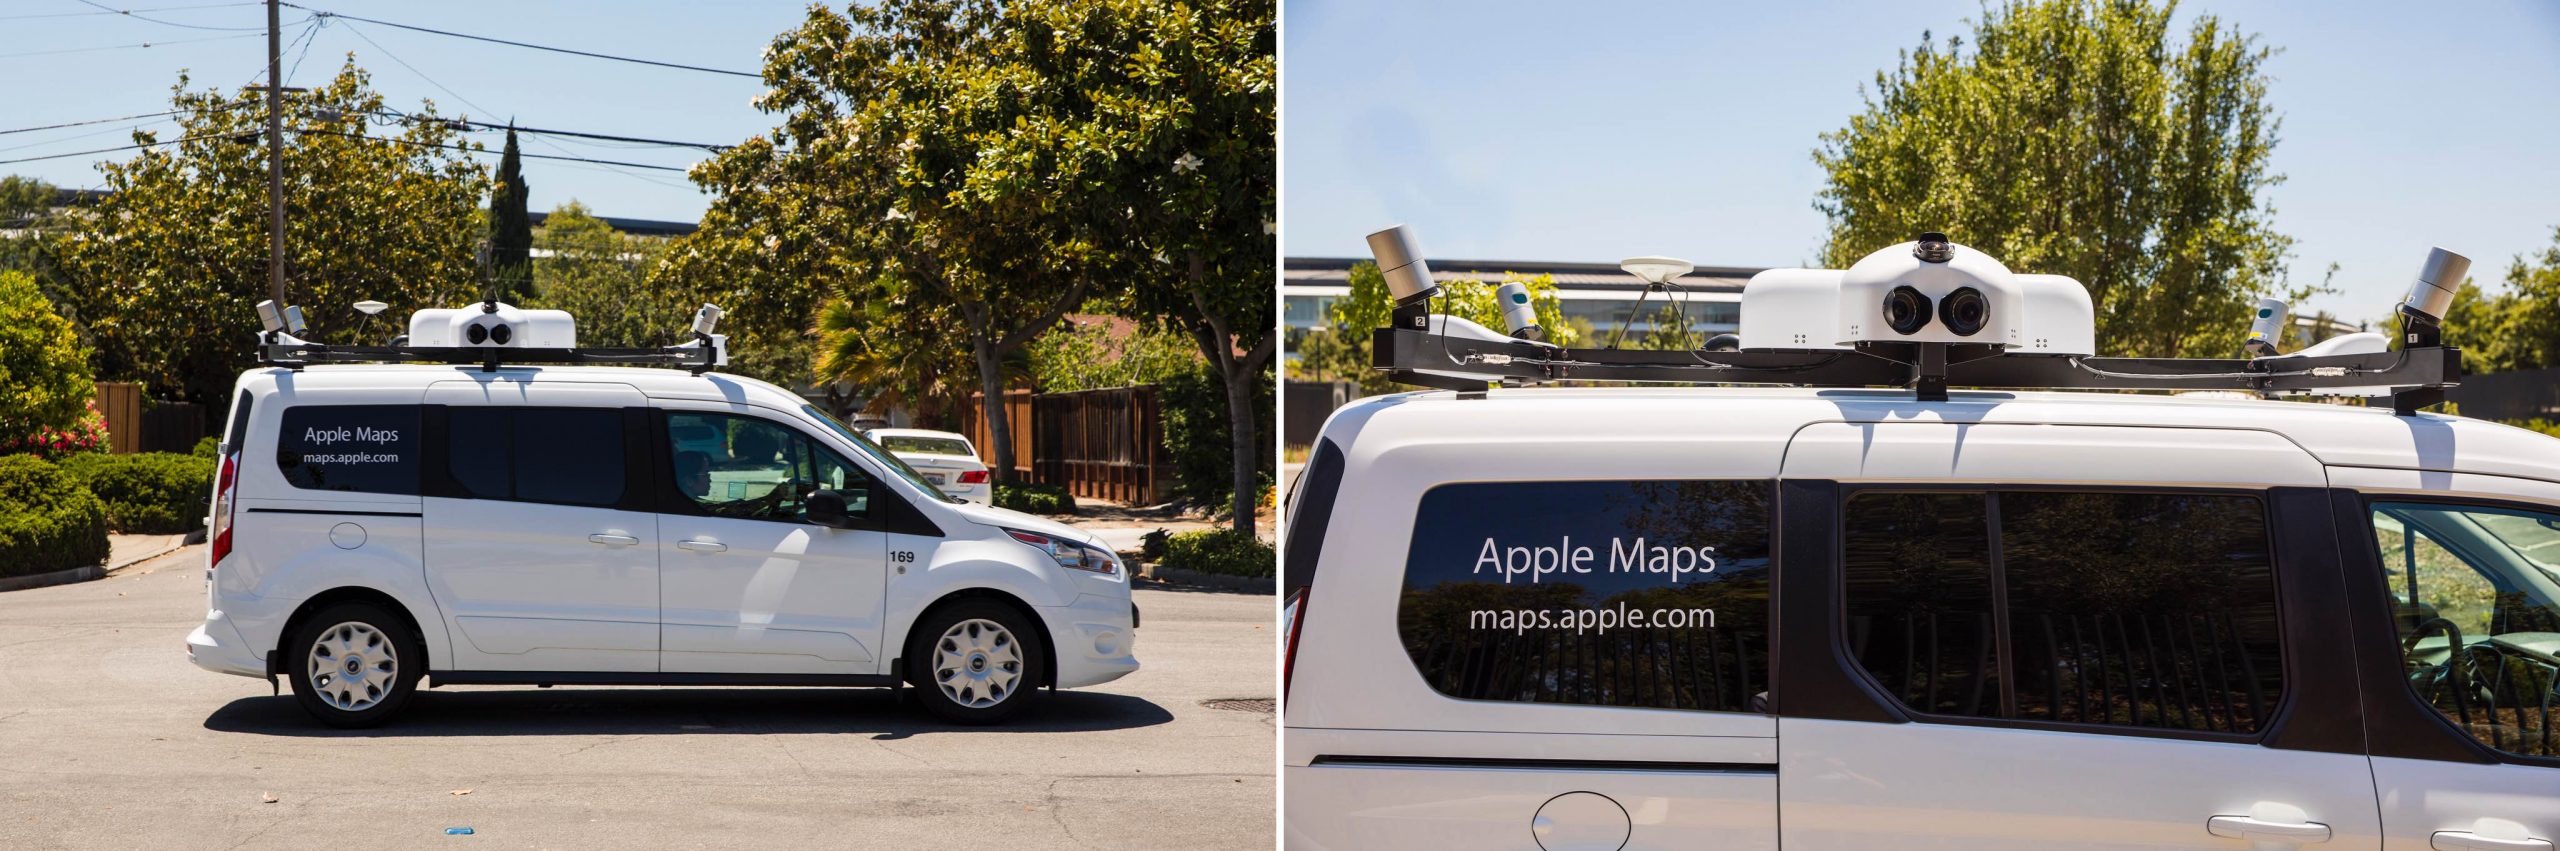 Apple-MAps-vehicles-002